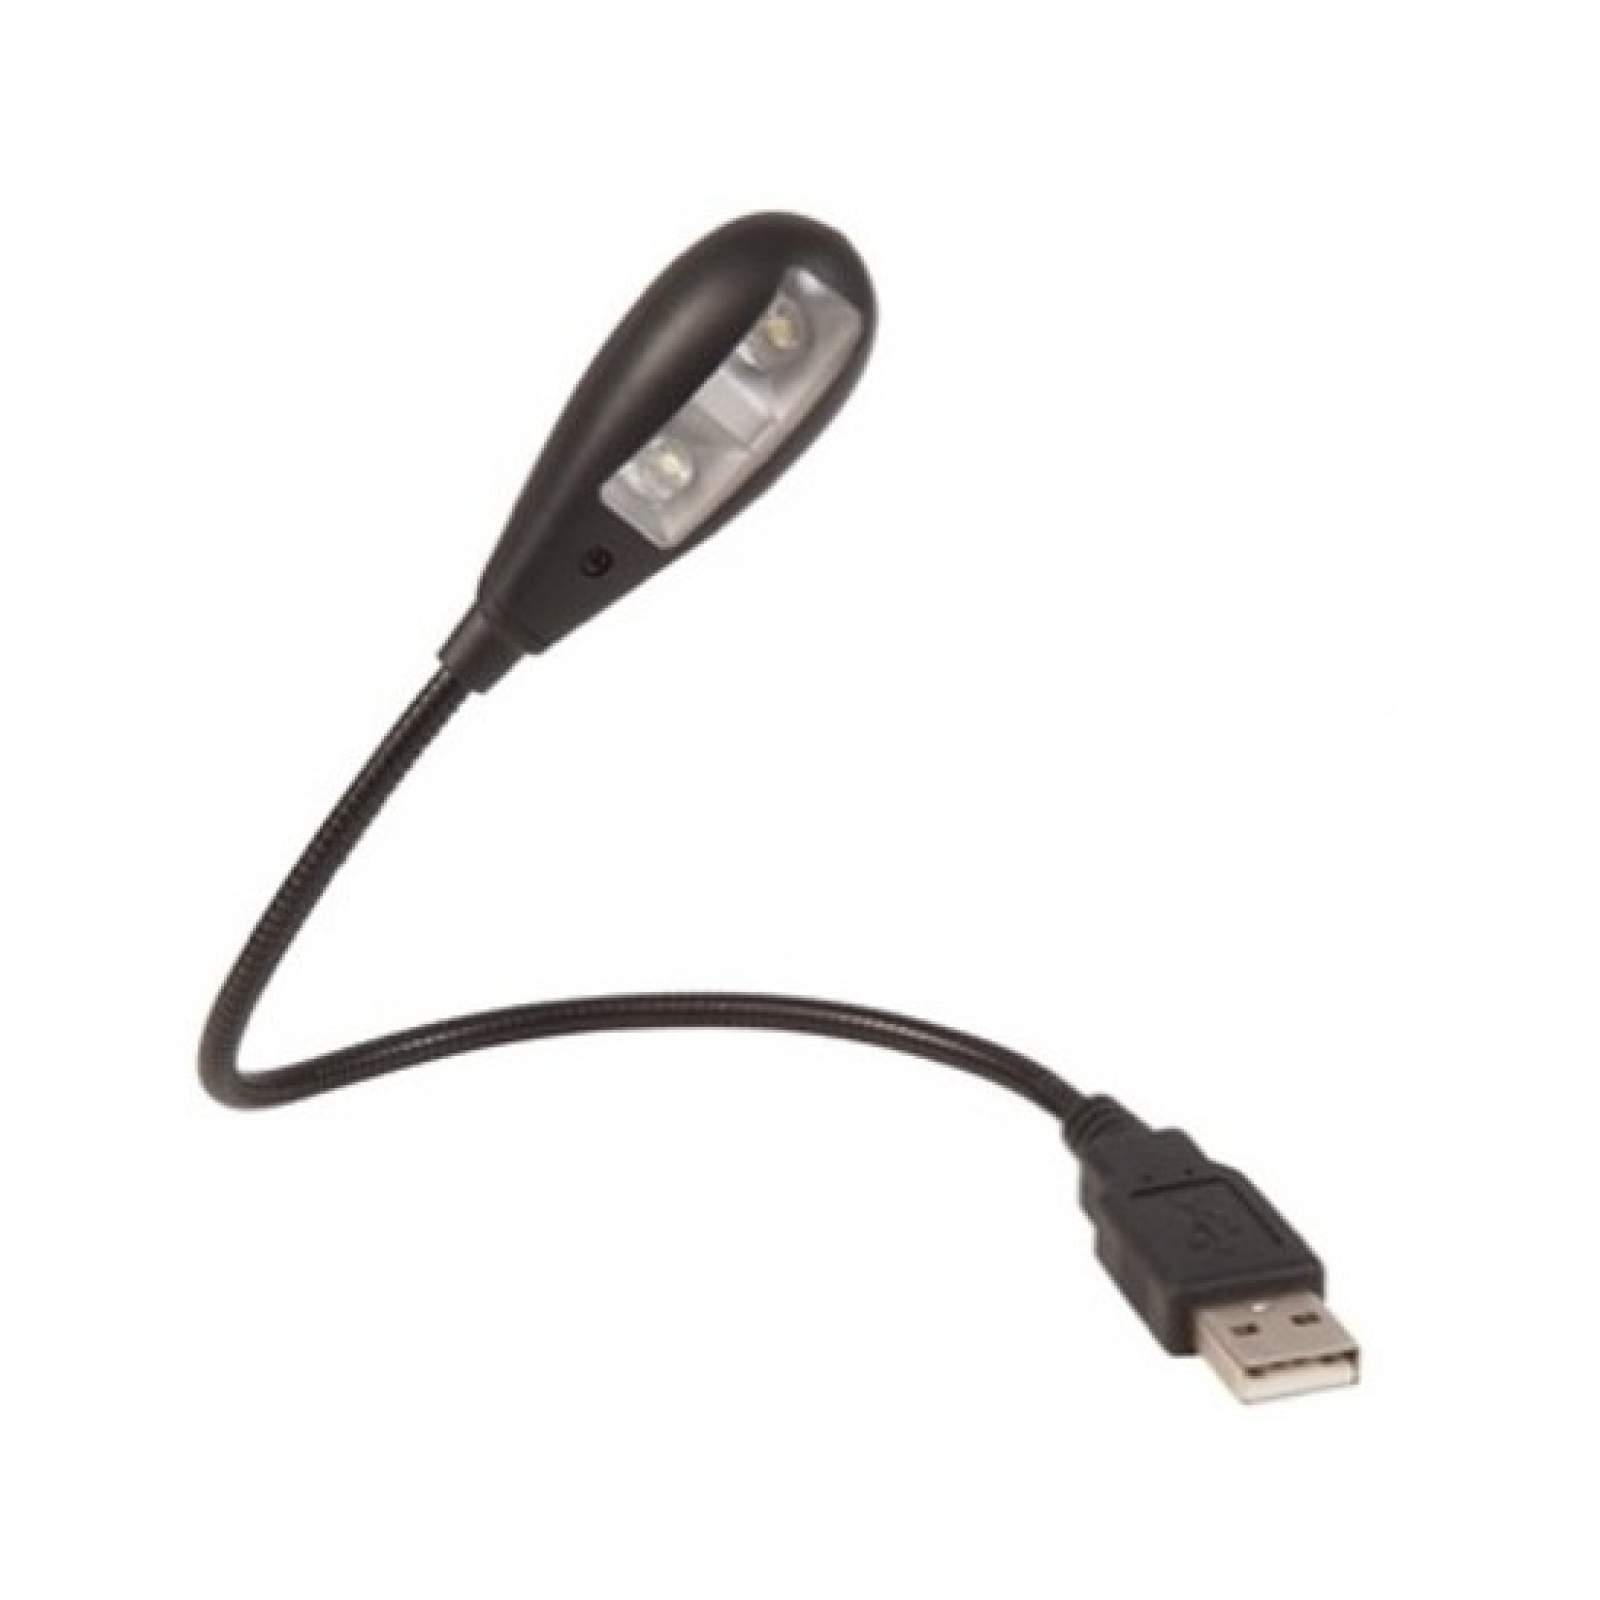 USB лампа - подсветка клавиатуры, на гибкой ножке